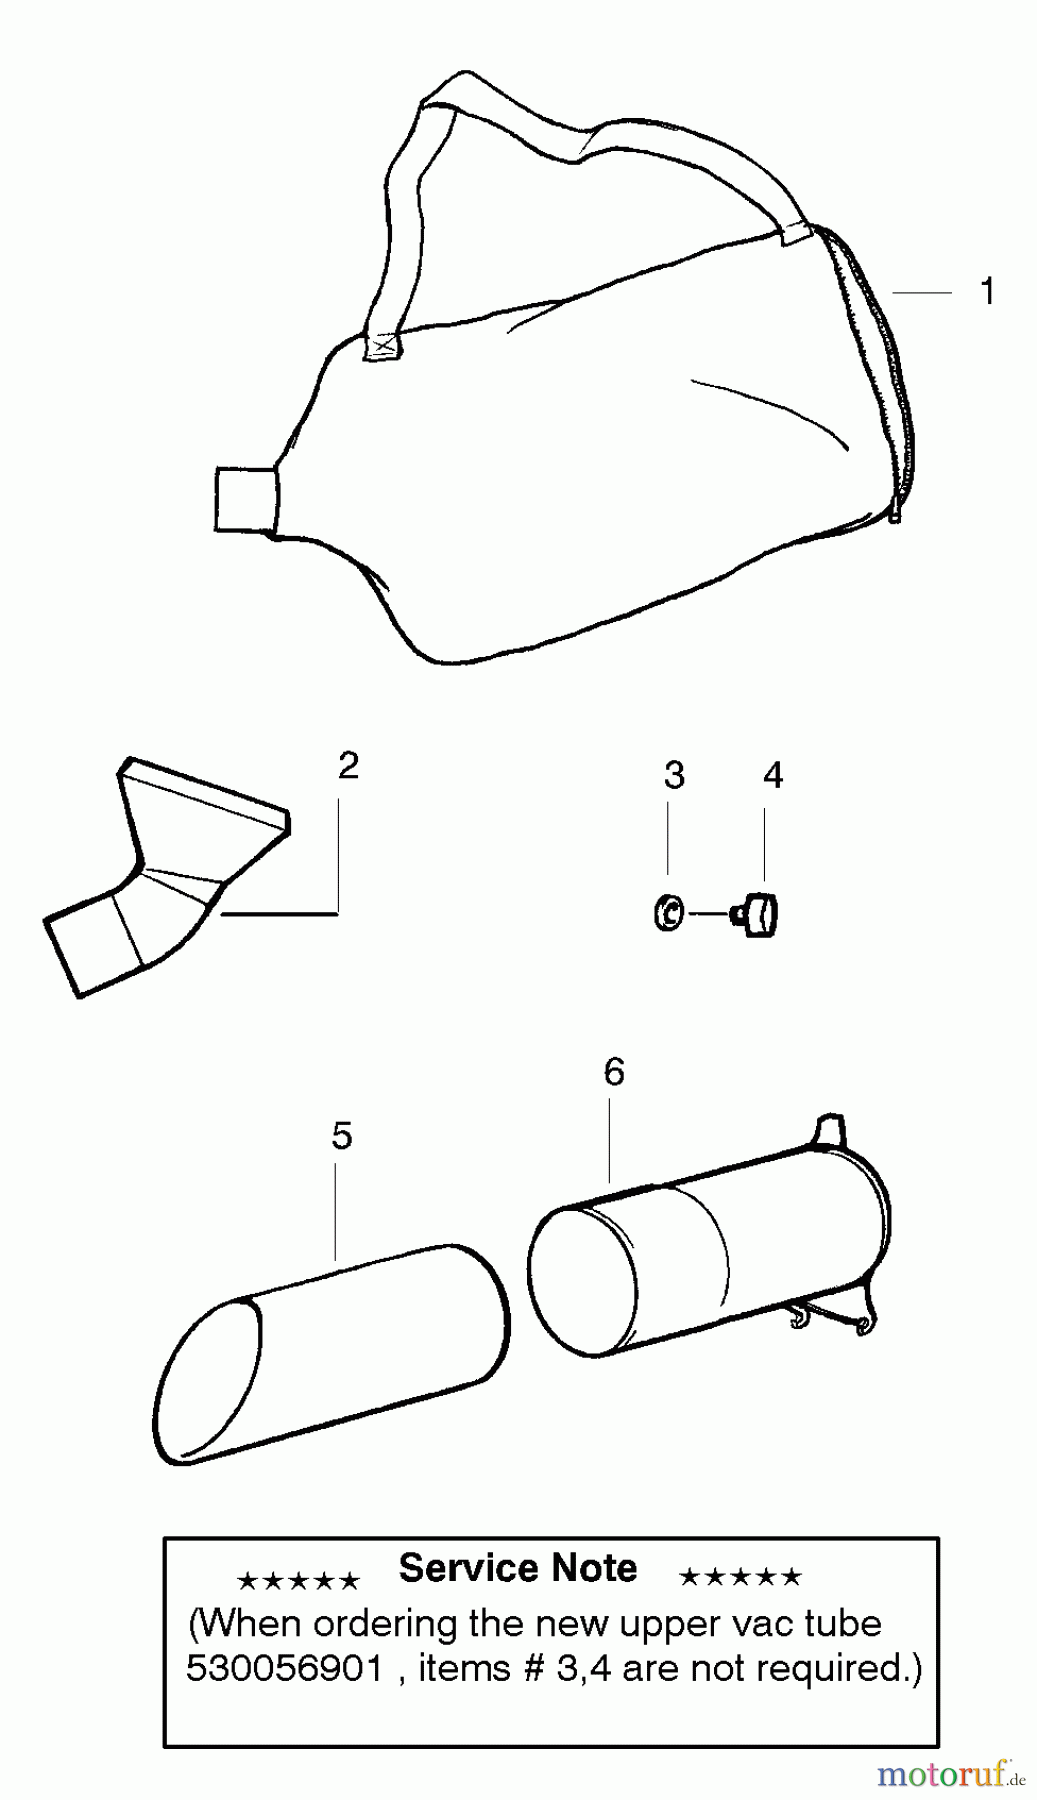  Poulan / Weed Eater Bläser / Sauger / Häcksler / Mulchgeräte BV1800 (Type 1) - Weed Eater Barracuda Blower Vacuum Tube Assembly